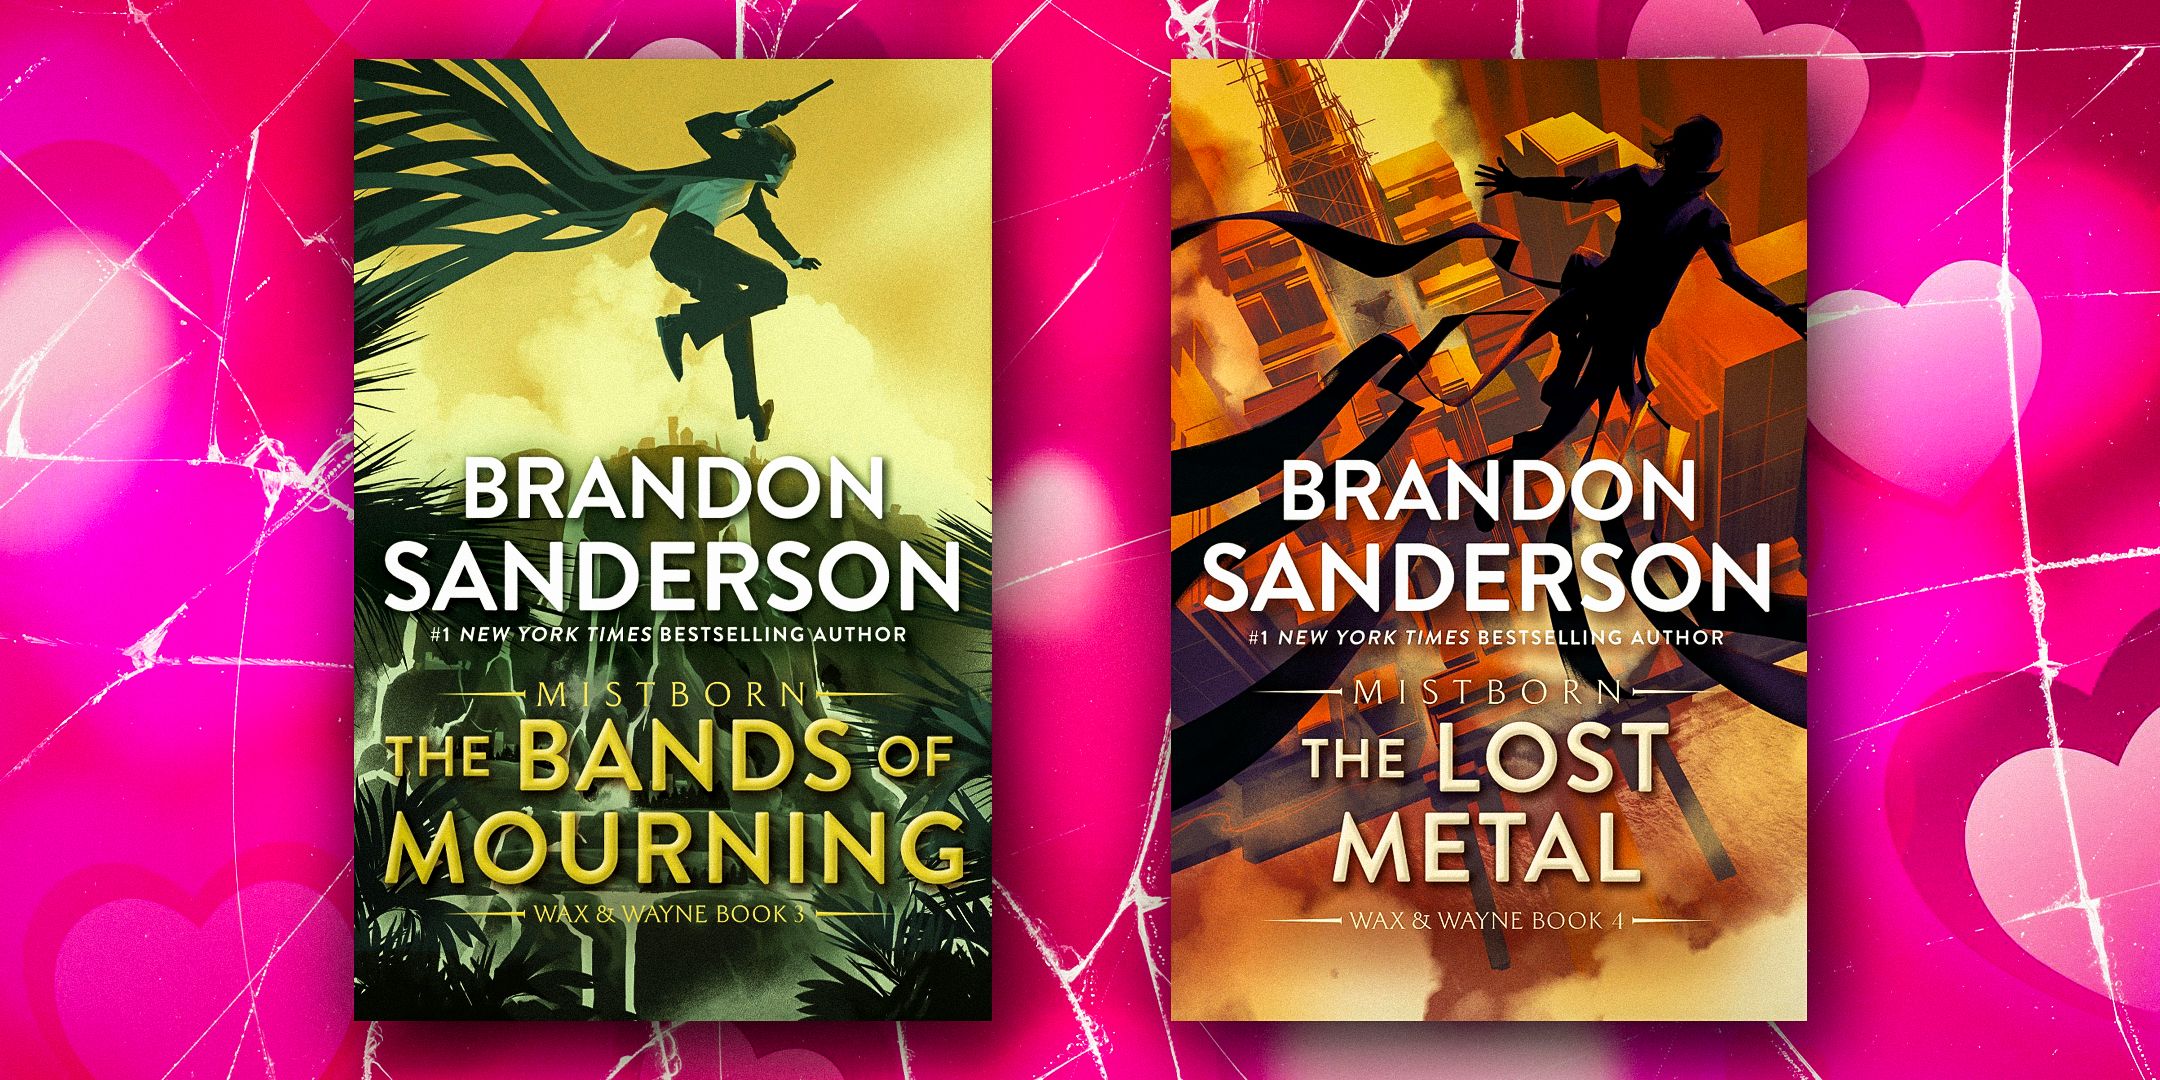 The next Mistborn series must break the strangest romance trend in books